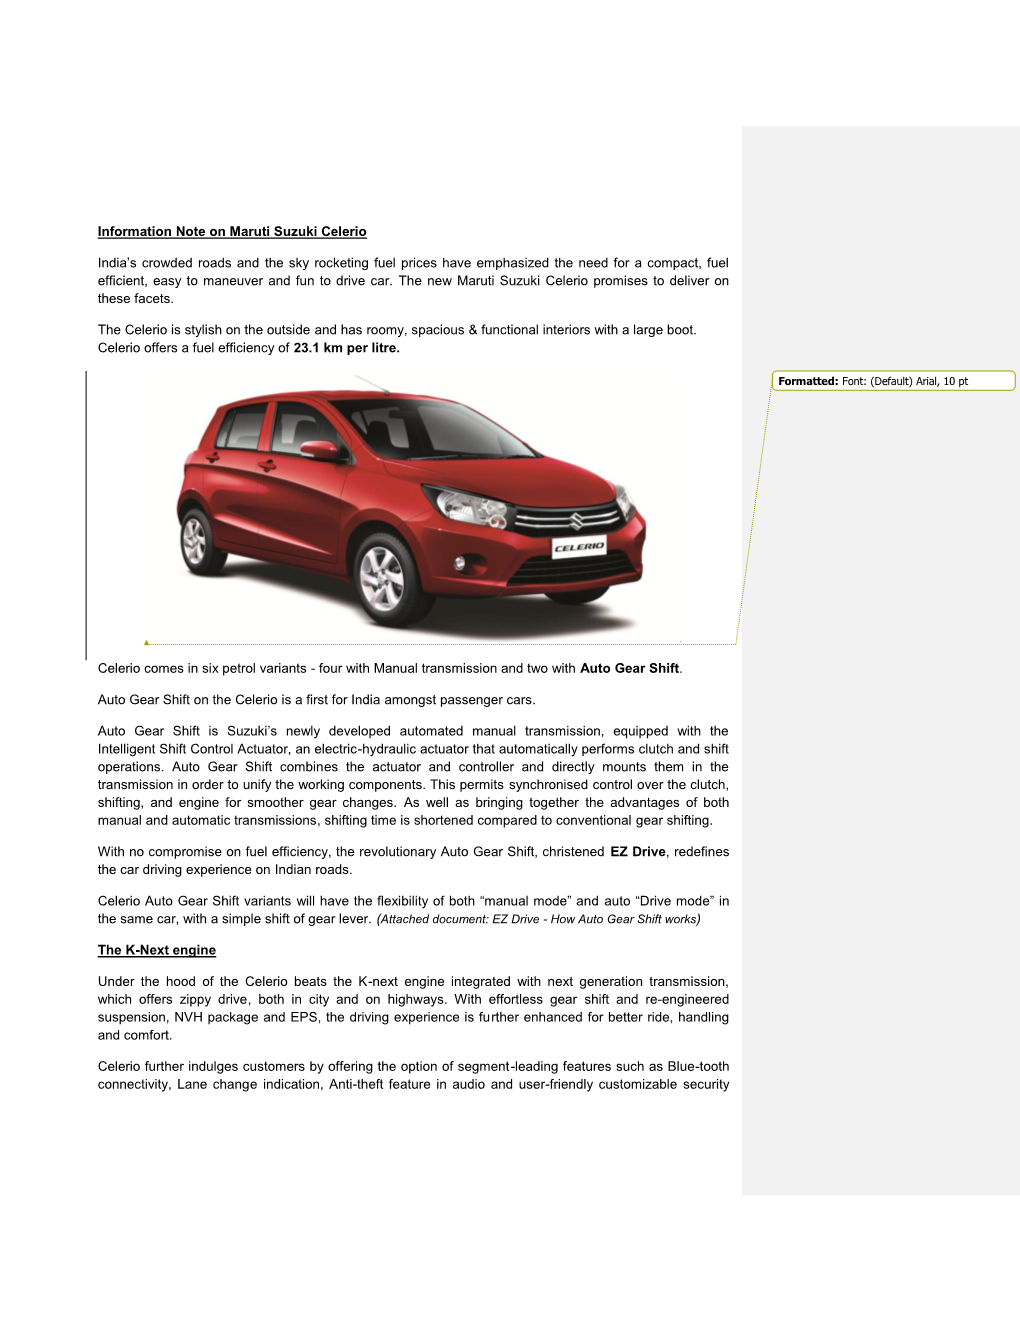 Information Note on Maruti Suzuki Celerio India's Crowded Roads And